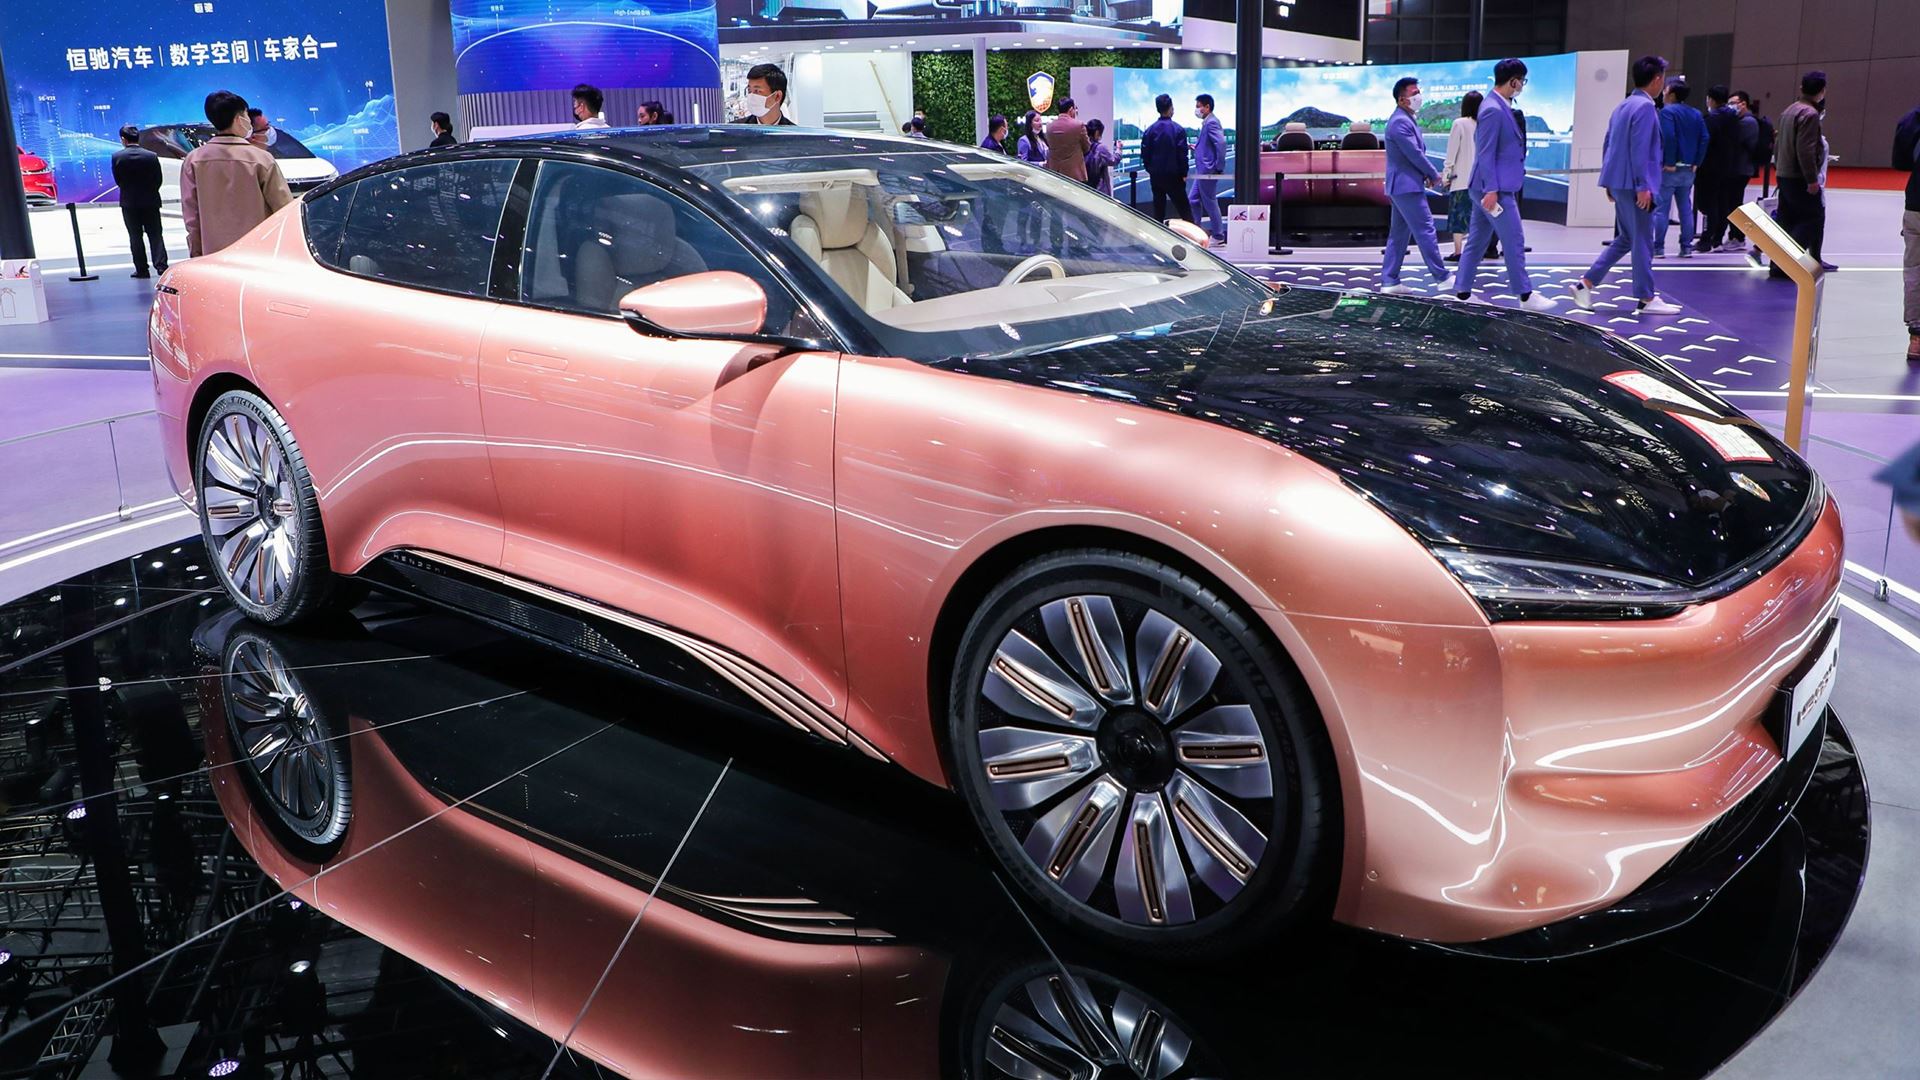 China's new energy vehicle industry stirs Auto Shanghai